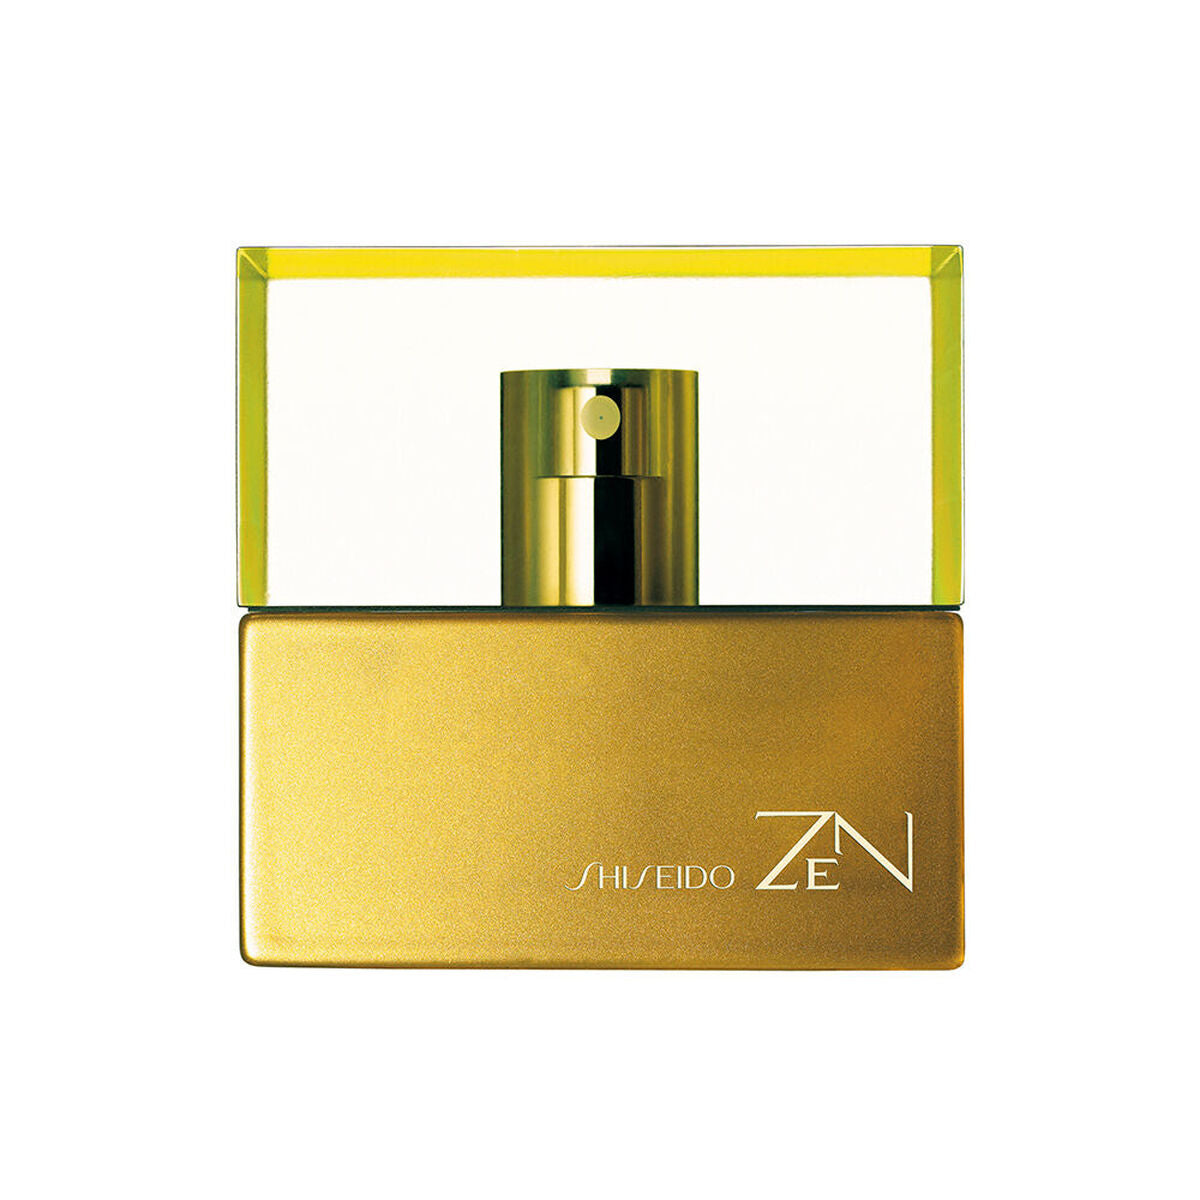 Kaufe Zen Shiseido Zen for Women (2007) EDP 100 ml - Damen bei AWK Flagship um € 69.00